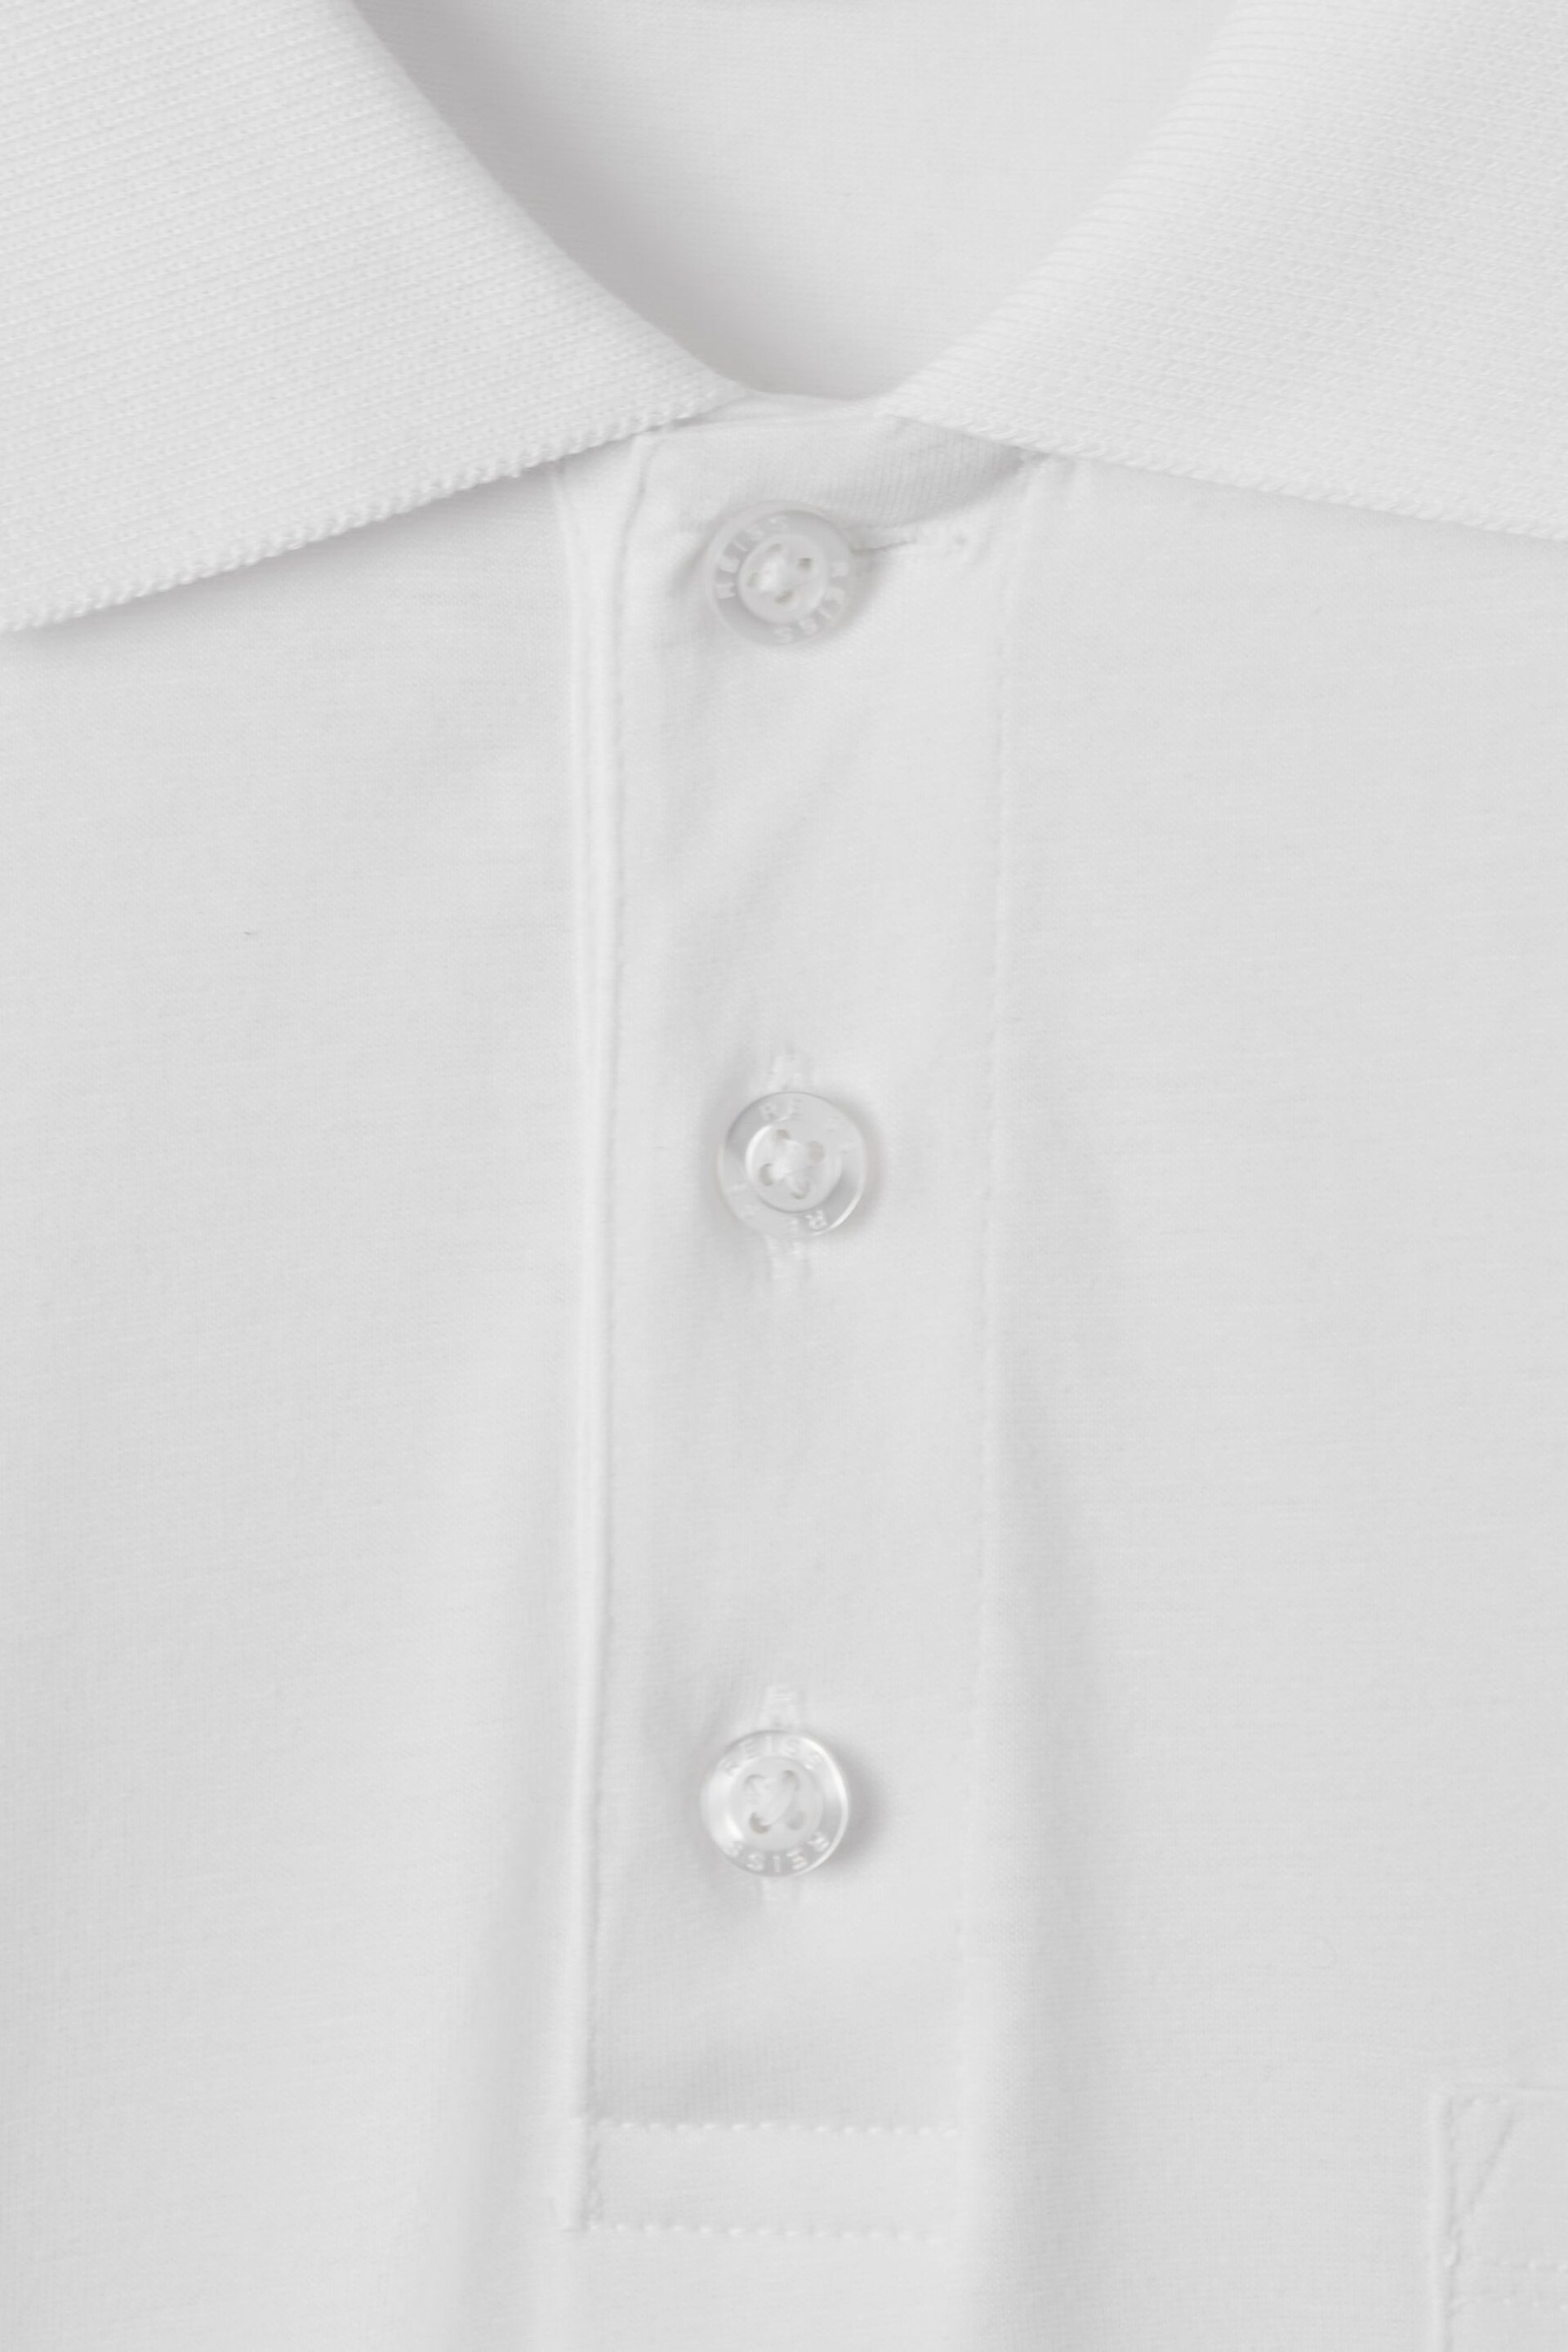 Reiss White Austin Mercerised Cotton Polo Shirt - Image 5 of 6